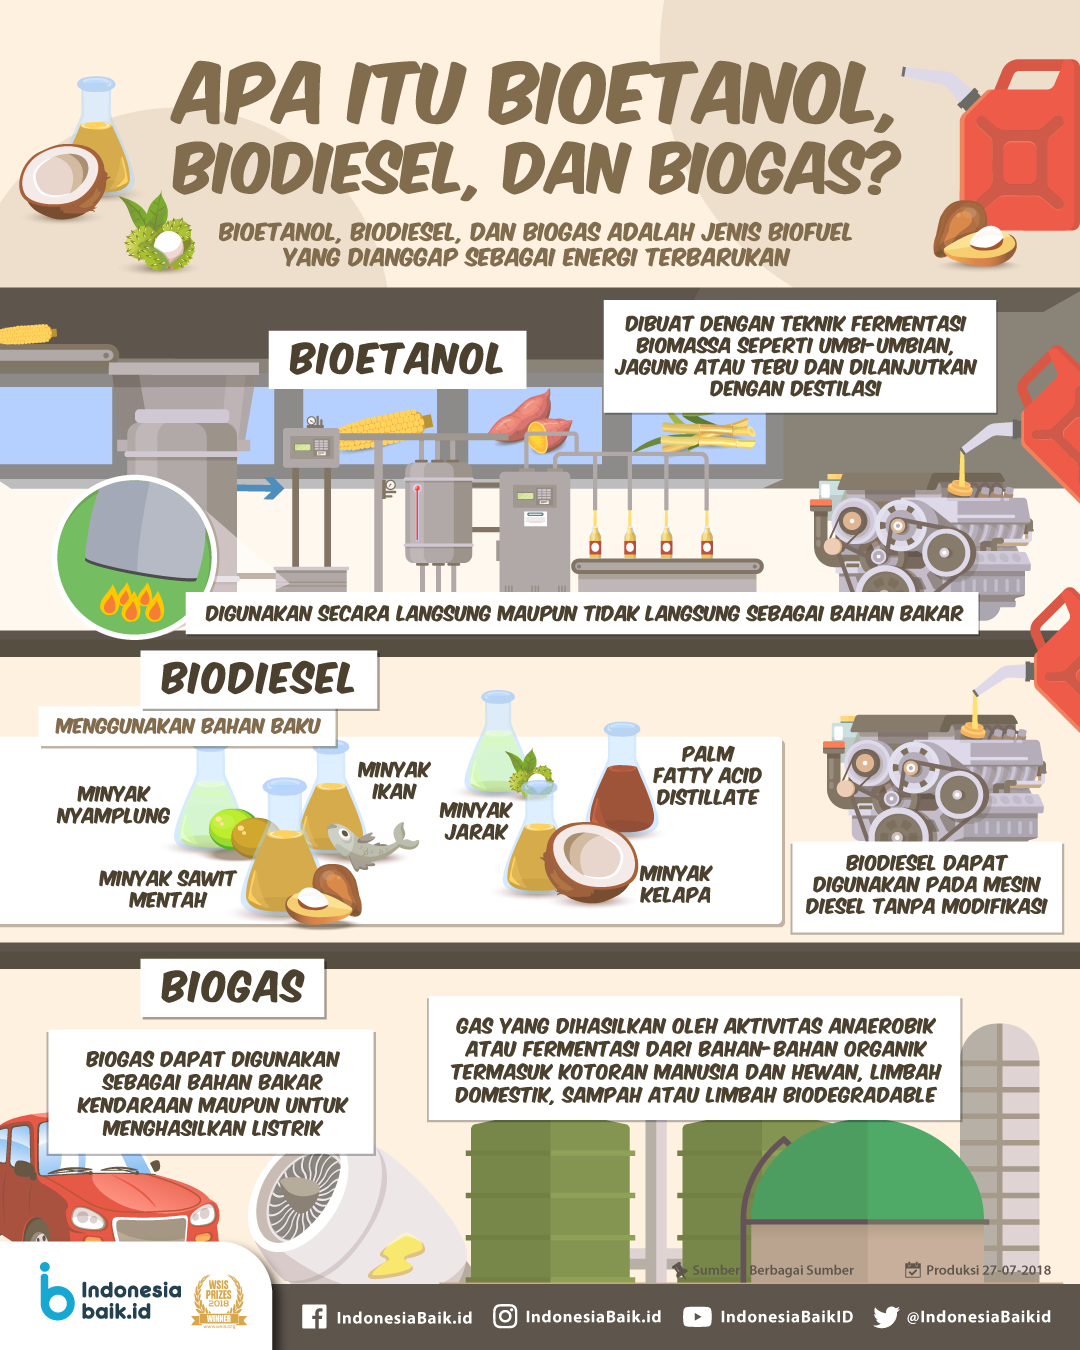 Sumber daya alam berupa tanaman yang dapat dijadikan bahan baku pembuatan biodiesel adalah